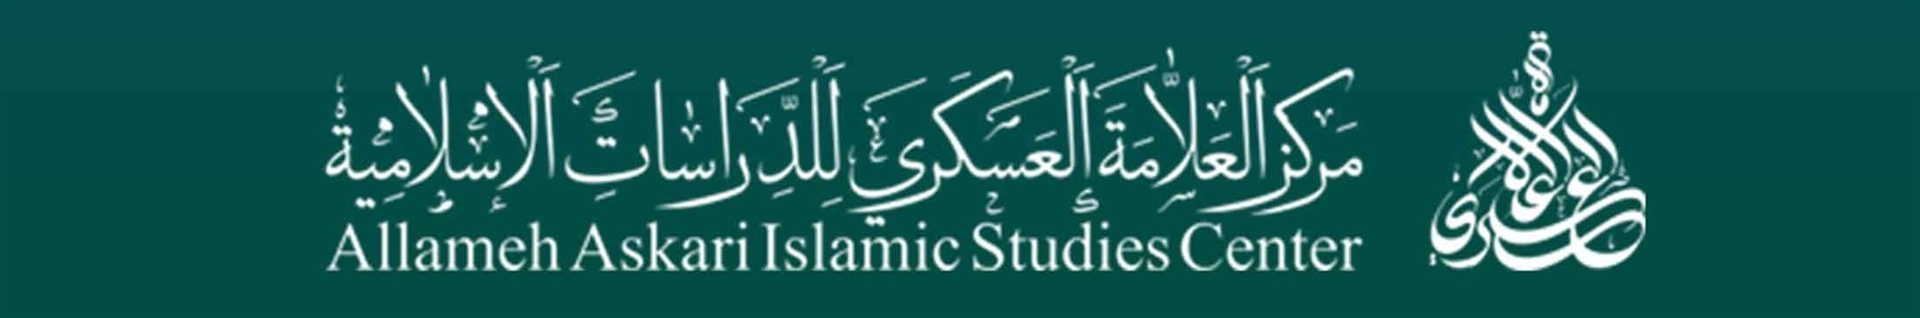 مرکز مطالعات اسلامی علامه عسکری